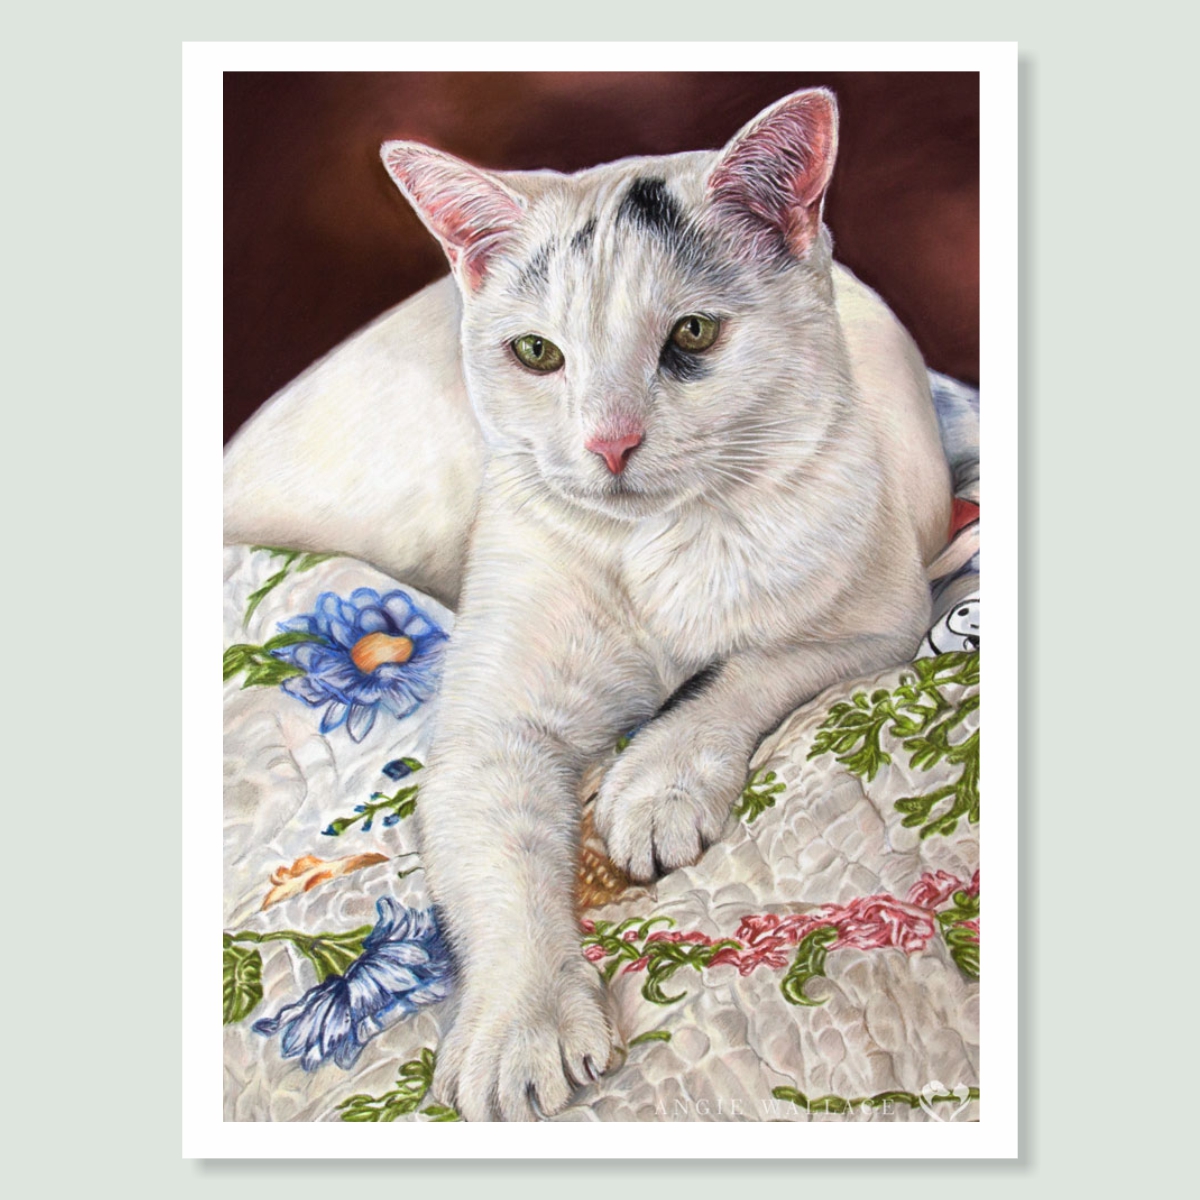 Betty - coloured pastel cat portrait by pet artist Angie.